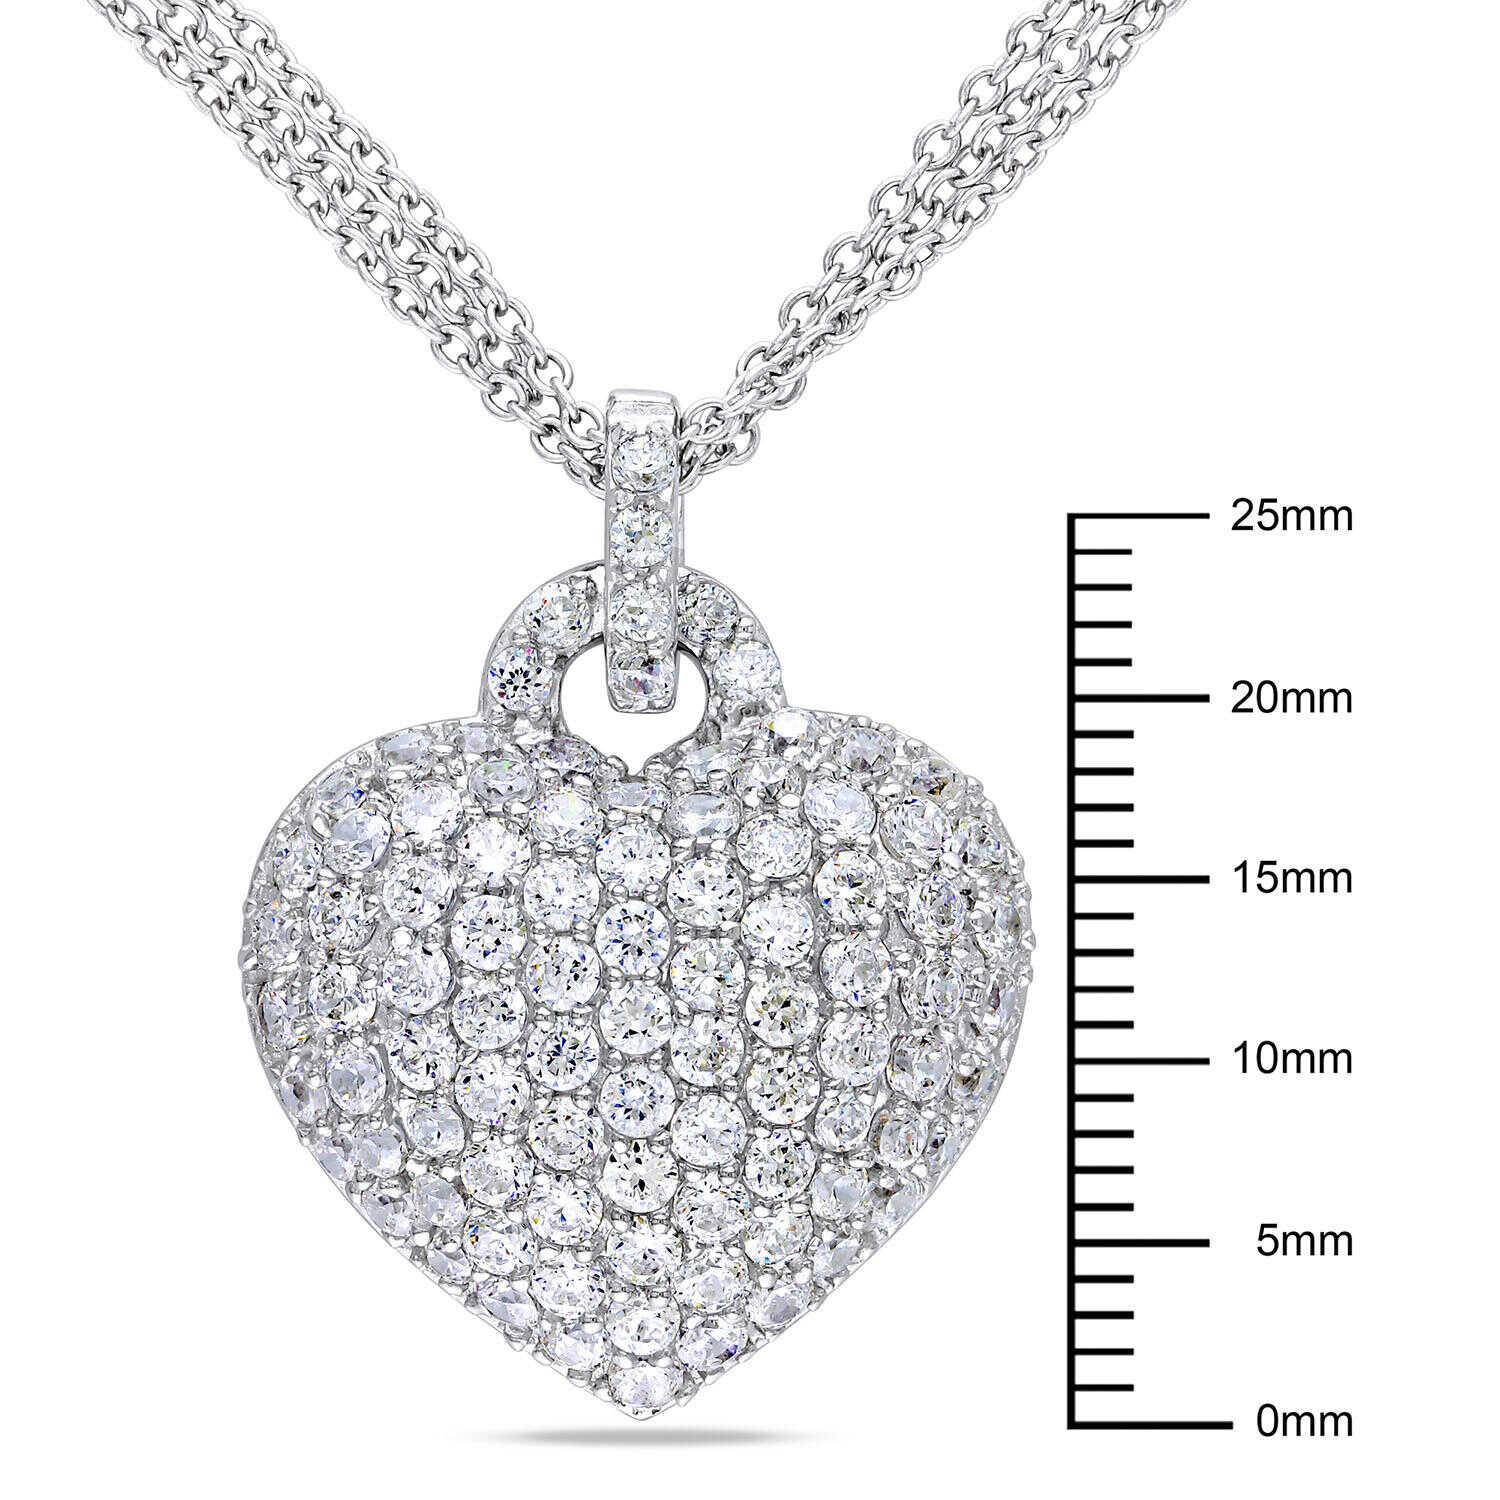 Lexzington - Home of Prestigious Finds - Created White Sapphire Heart Pendant in Sterling Silver